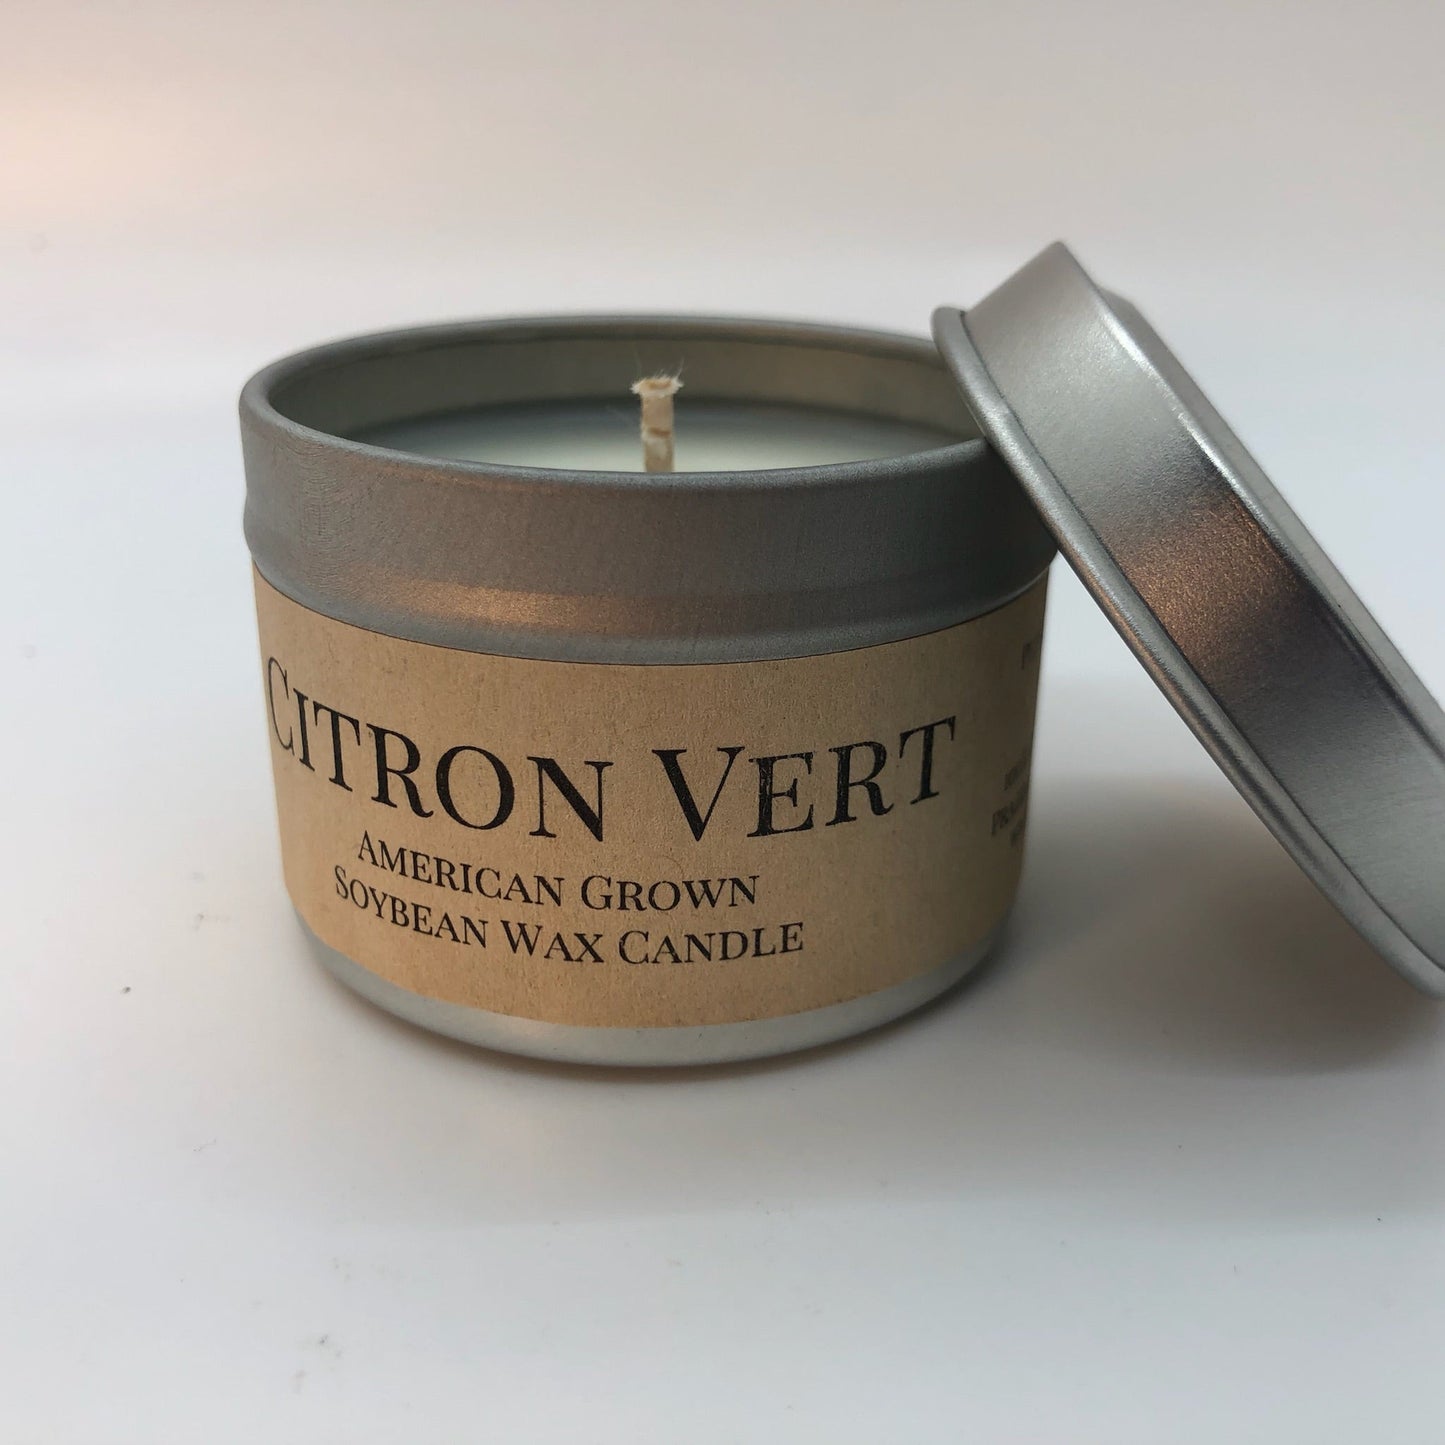 Citron Vert Soy Candle | 2 oz Travel Tin